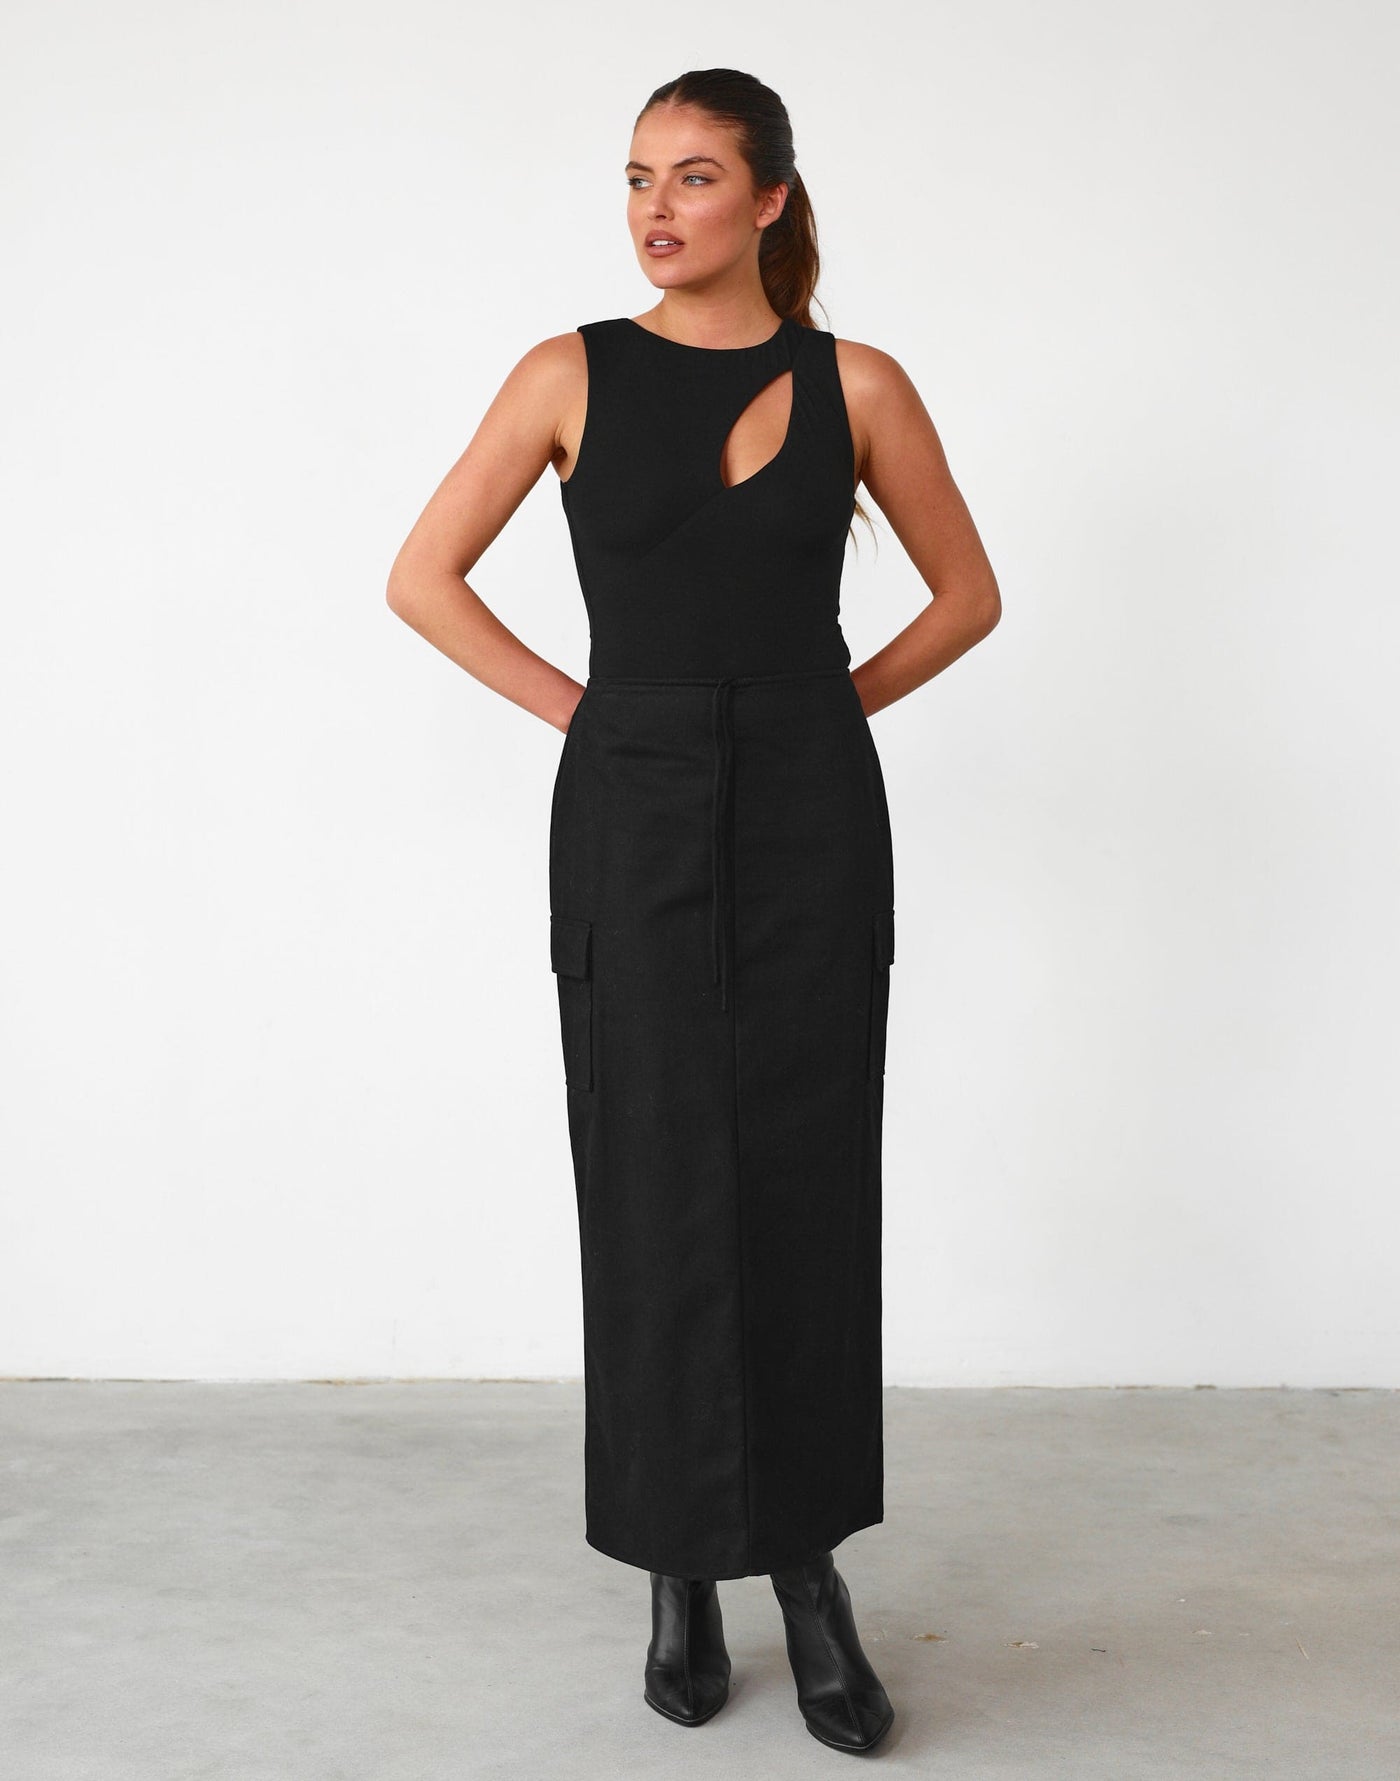 Kimmy Bodysuit (Black) - Cut Out Sleeveless Bodysuit - Women's Top - Charcoal Clothing